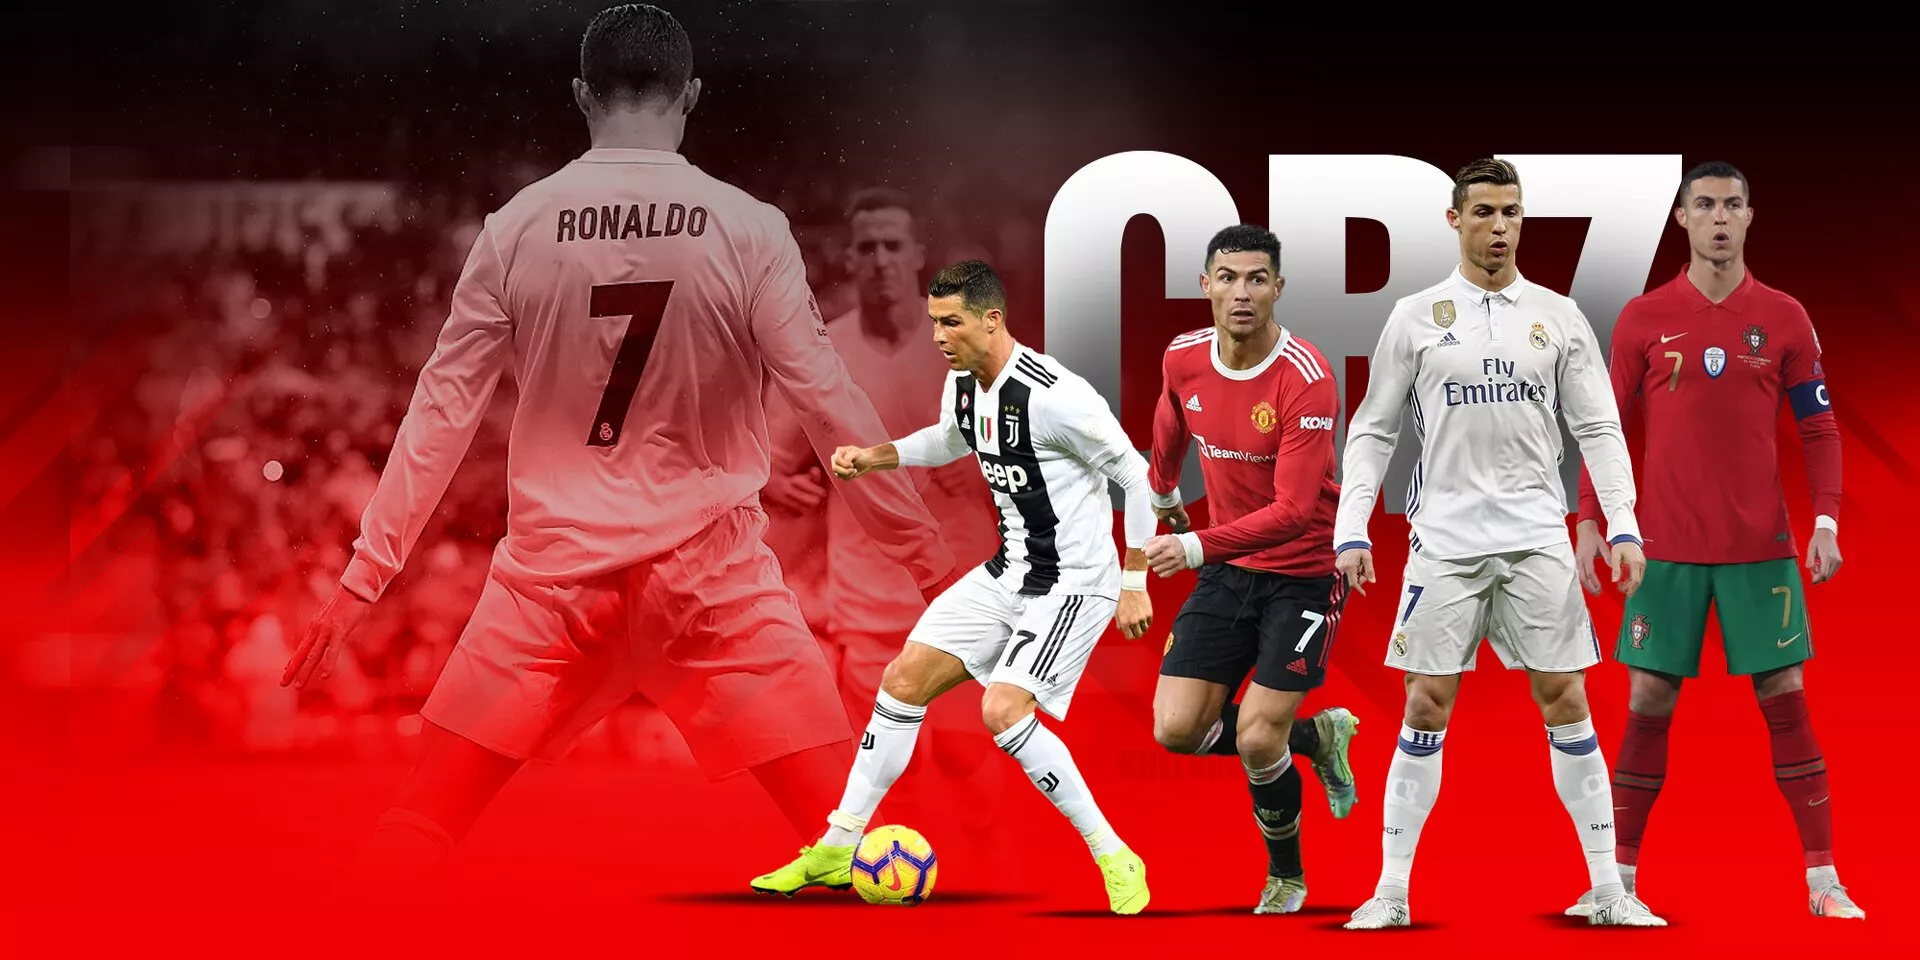 UEFA Champions League on X: 500 career goals for Cristiano Ronaldo! #UCL   / X